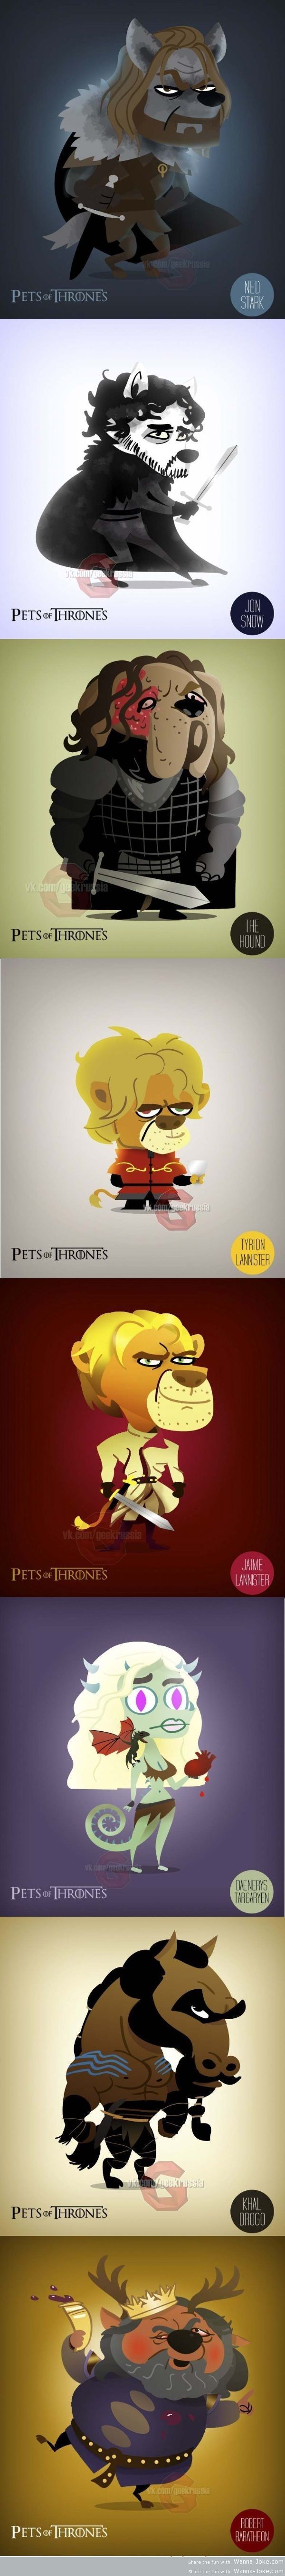 pets-of-thrones